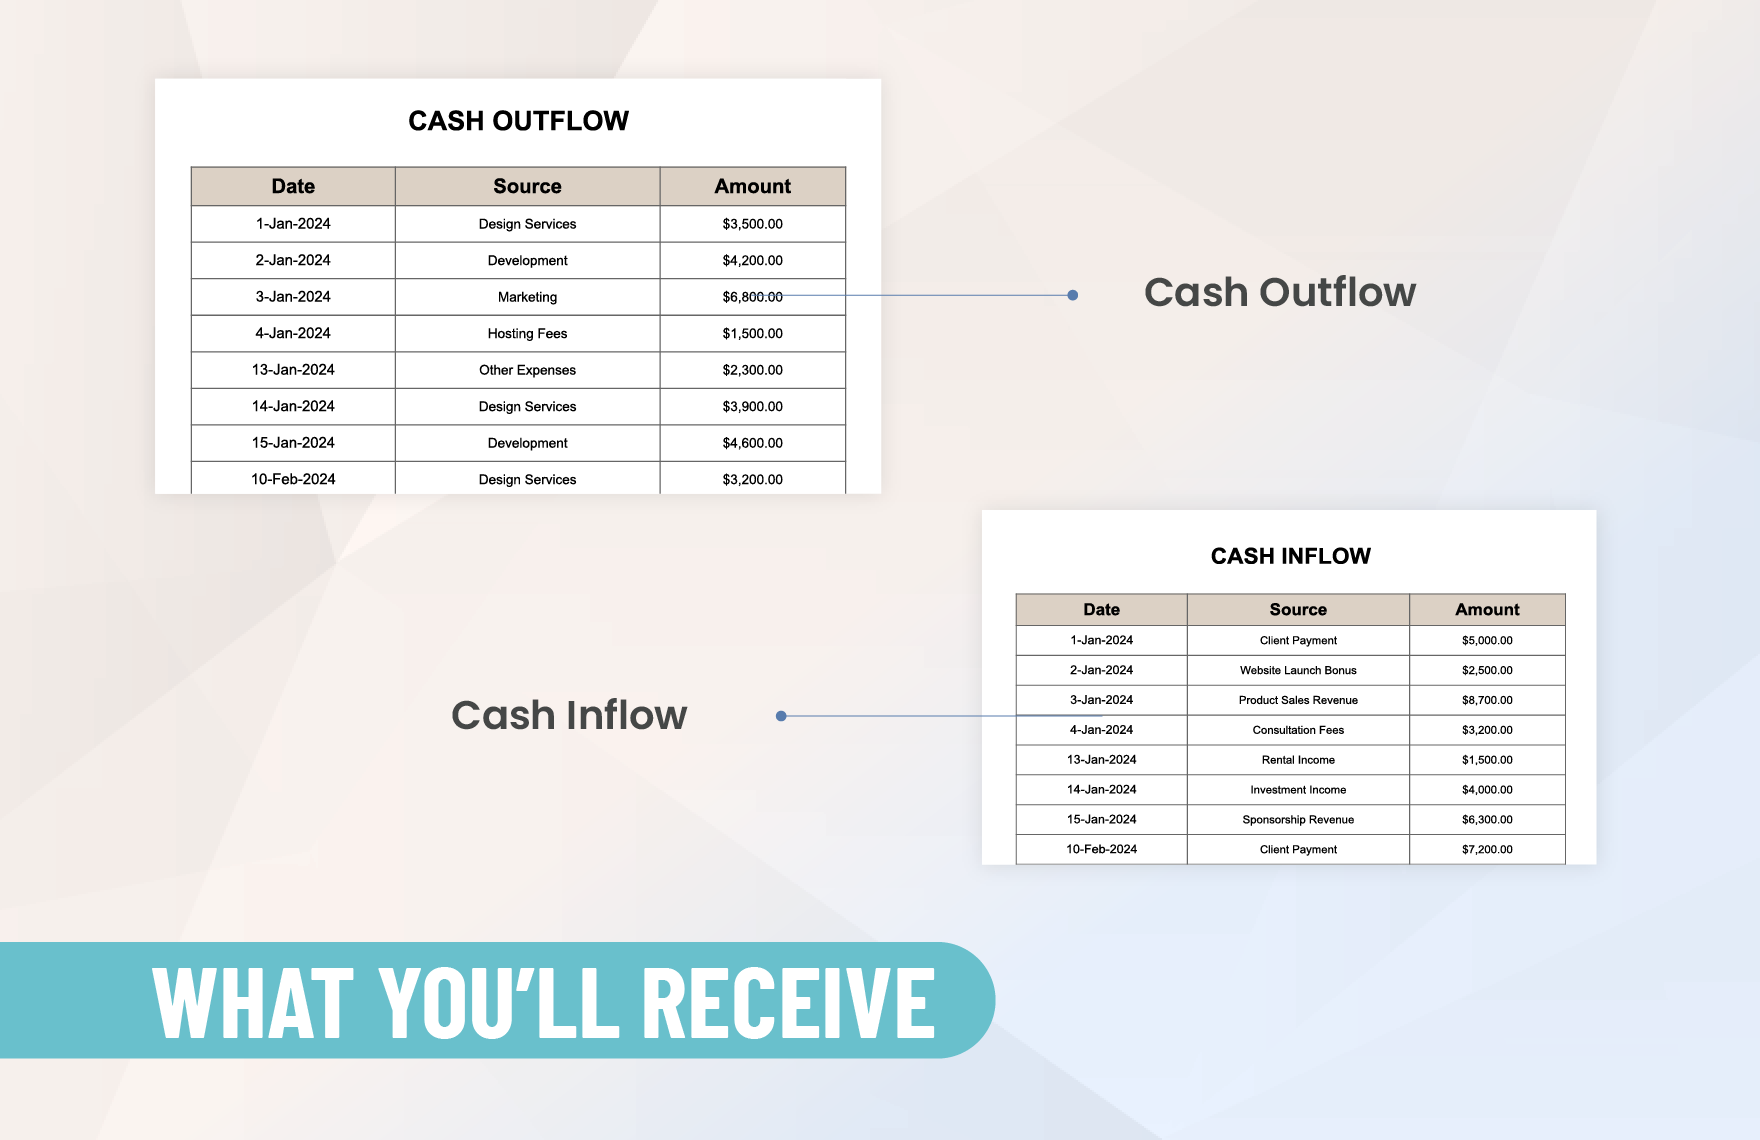 Cashflow Forecast Project Template